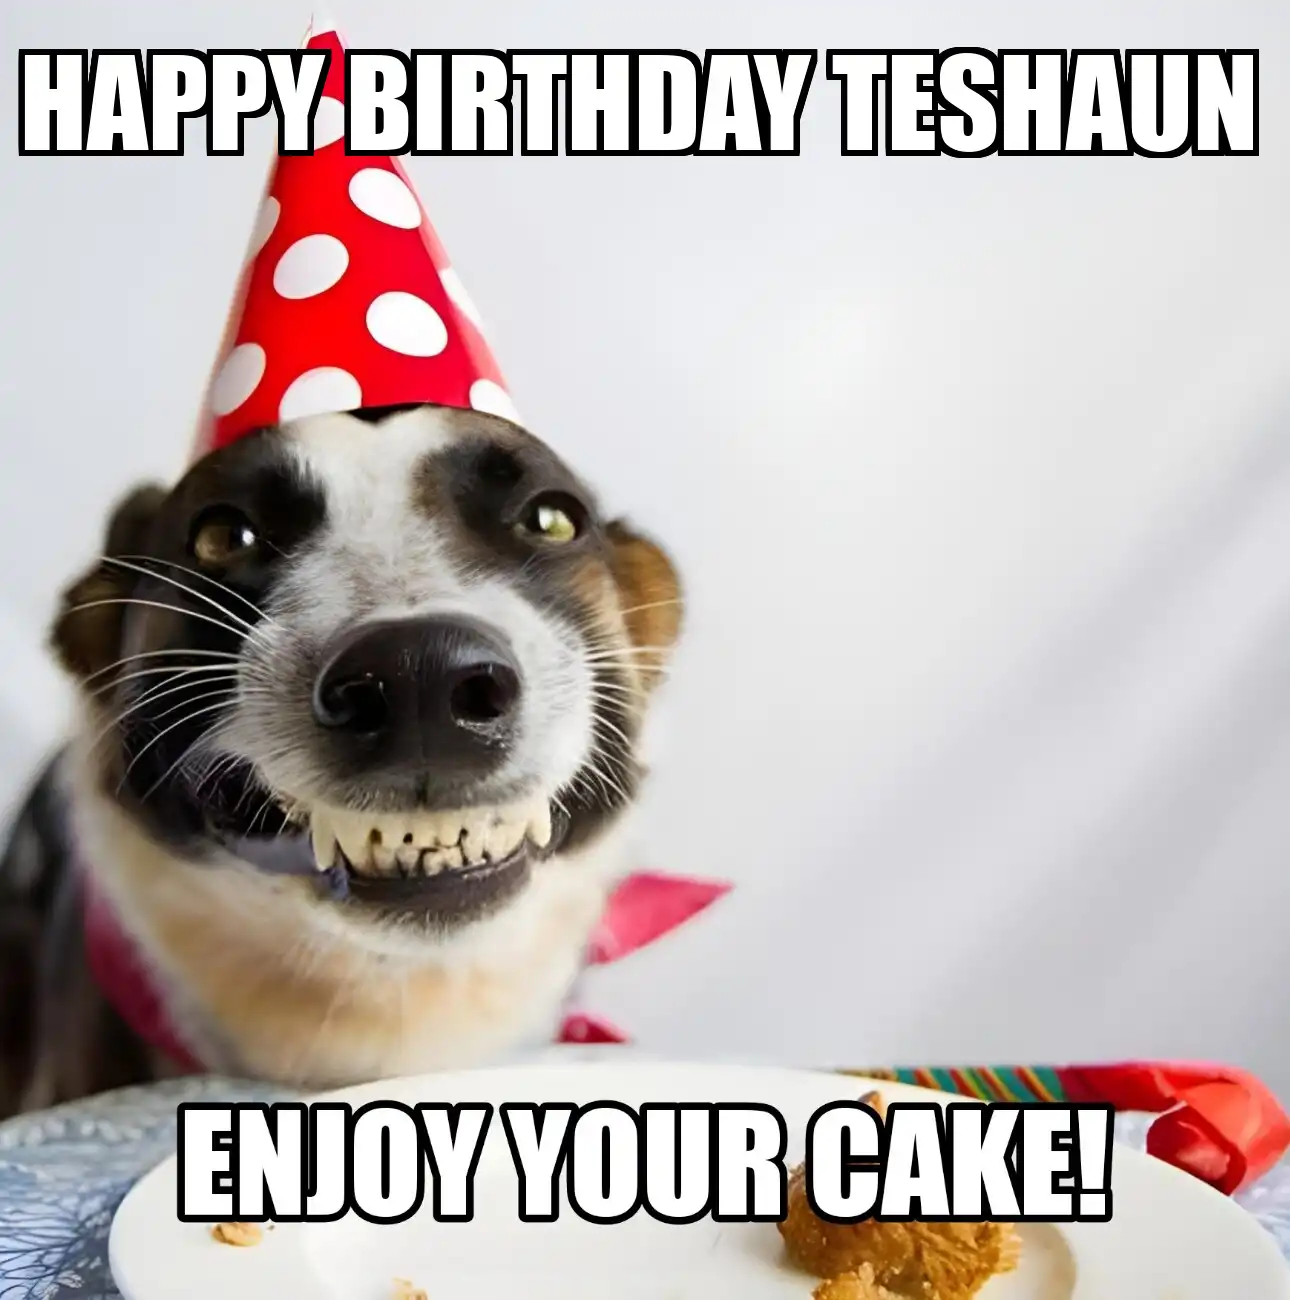 Happy Birthday Teshaun Enjoy Your Cake Dog Meme